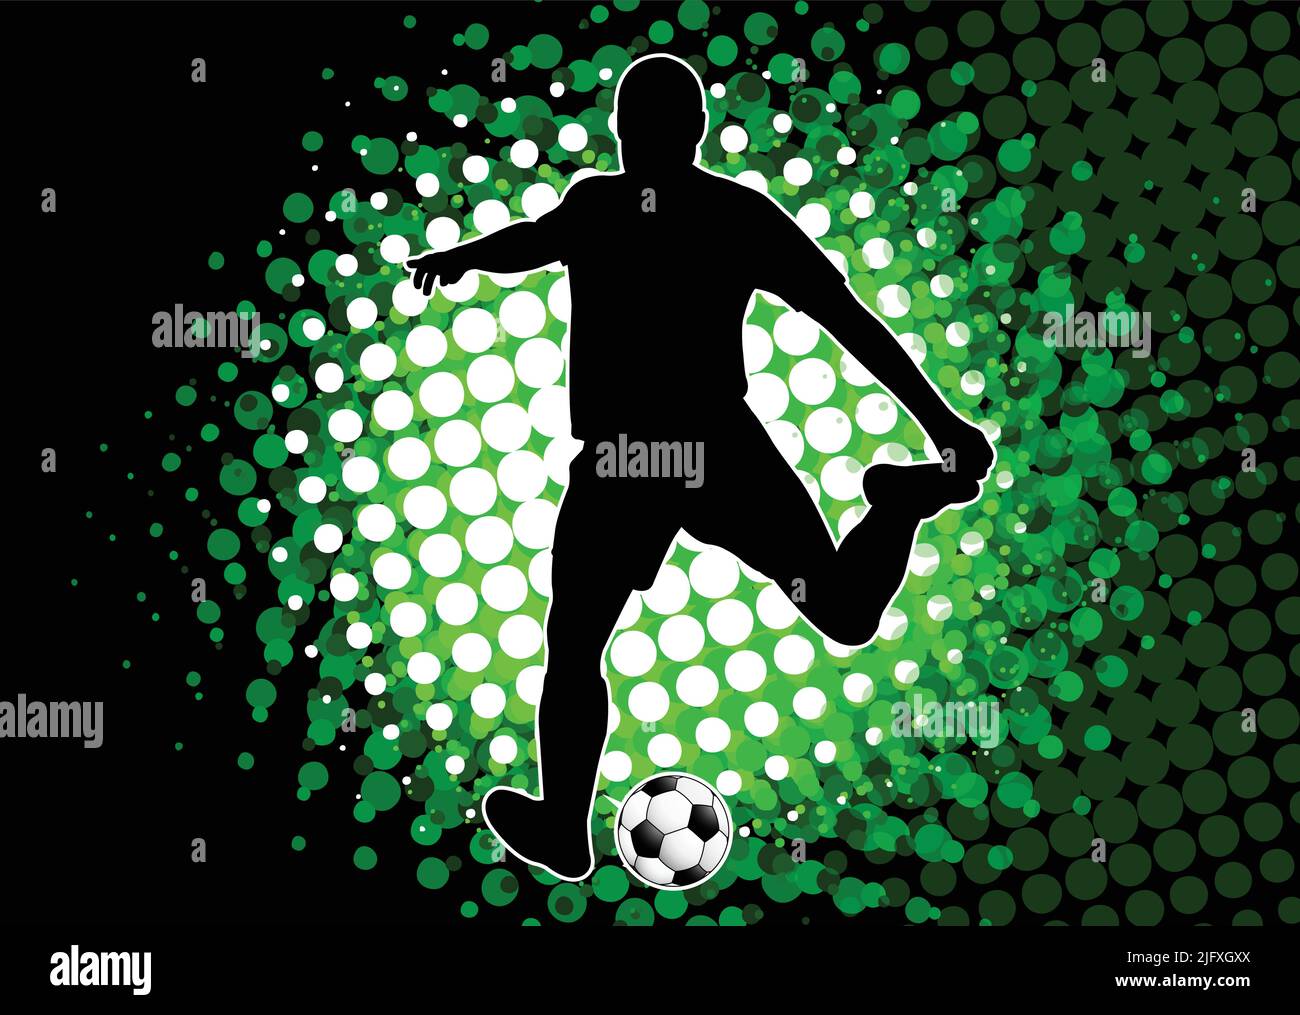 Fußball-Spieler Silhouette über Halbton Splash Hintergrund - Vektor-Grafik Stock Vektor